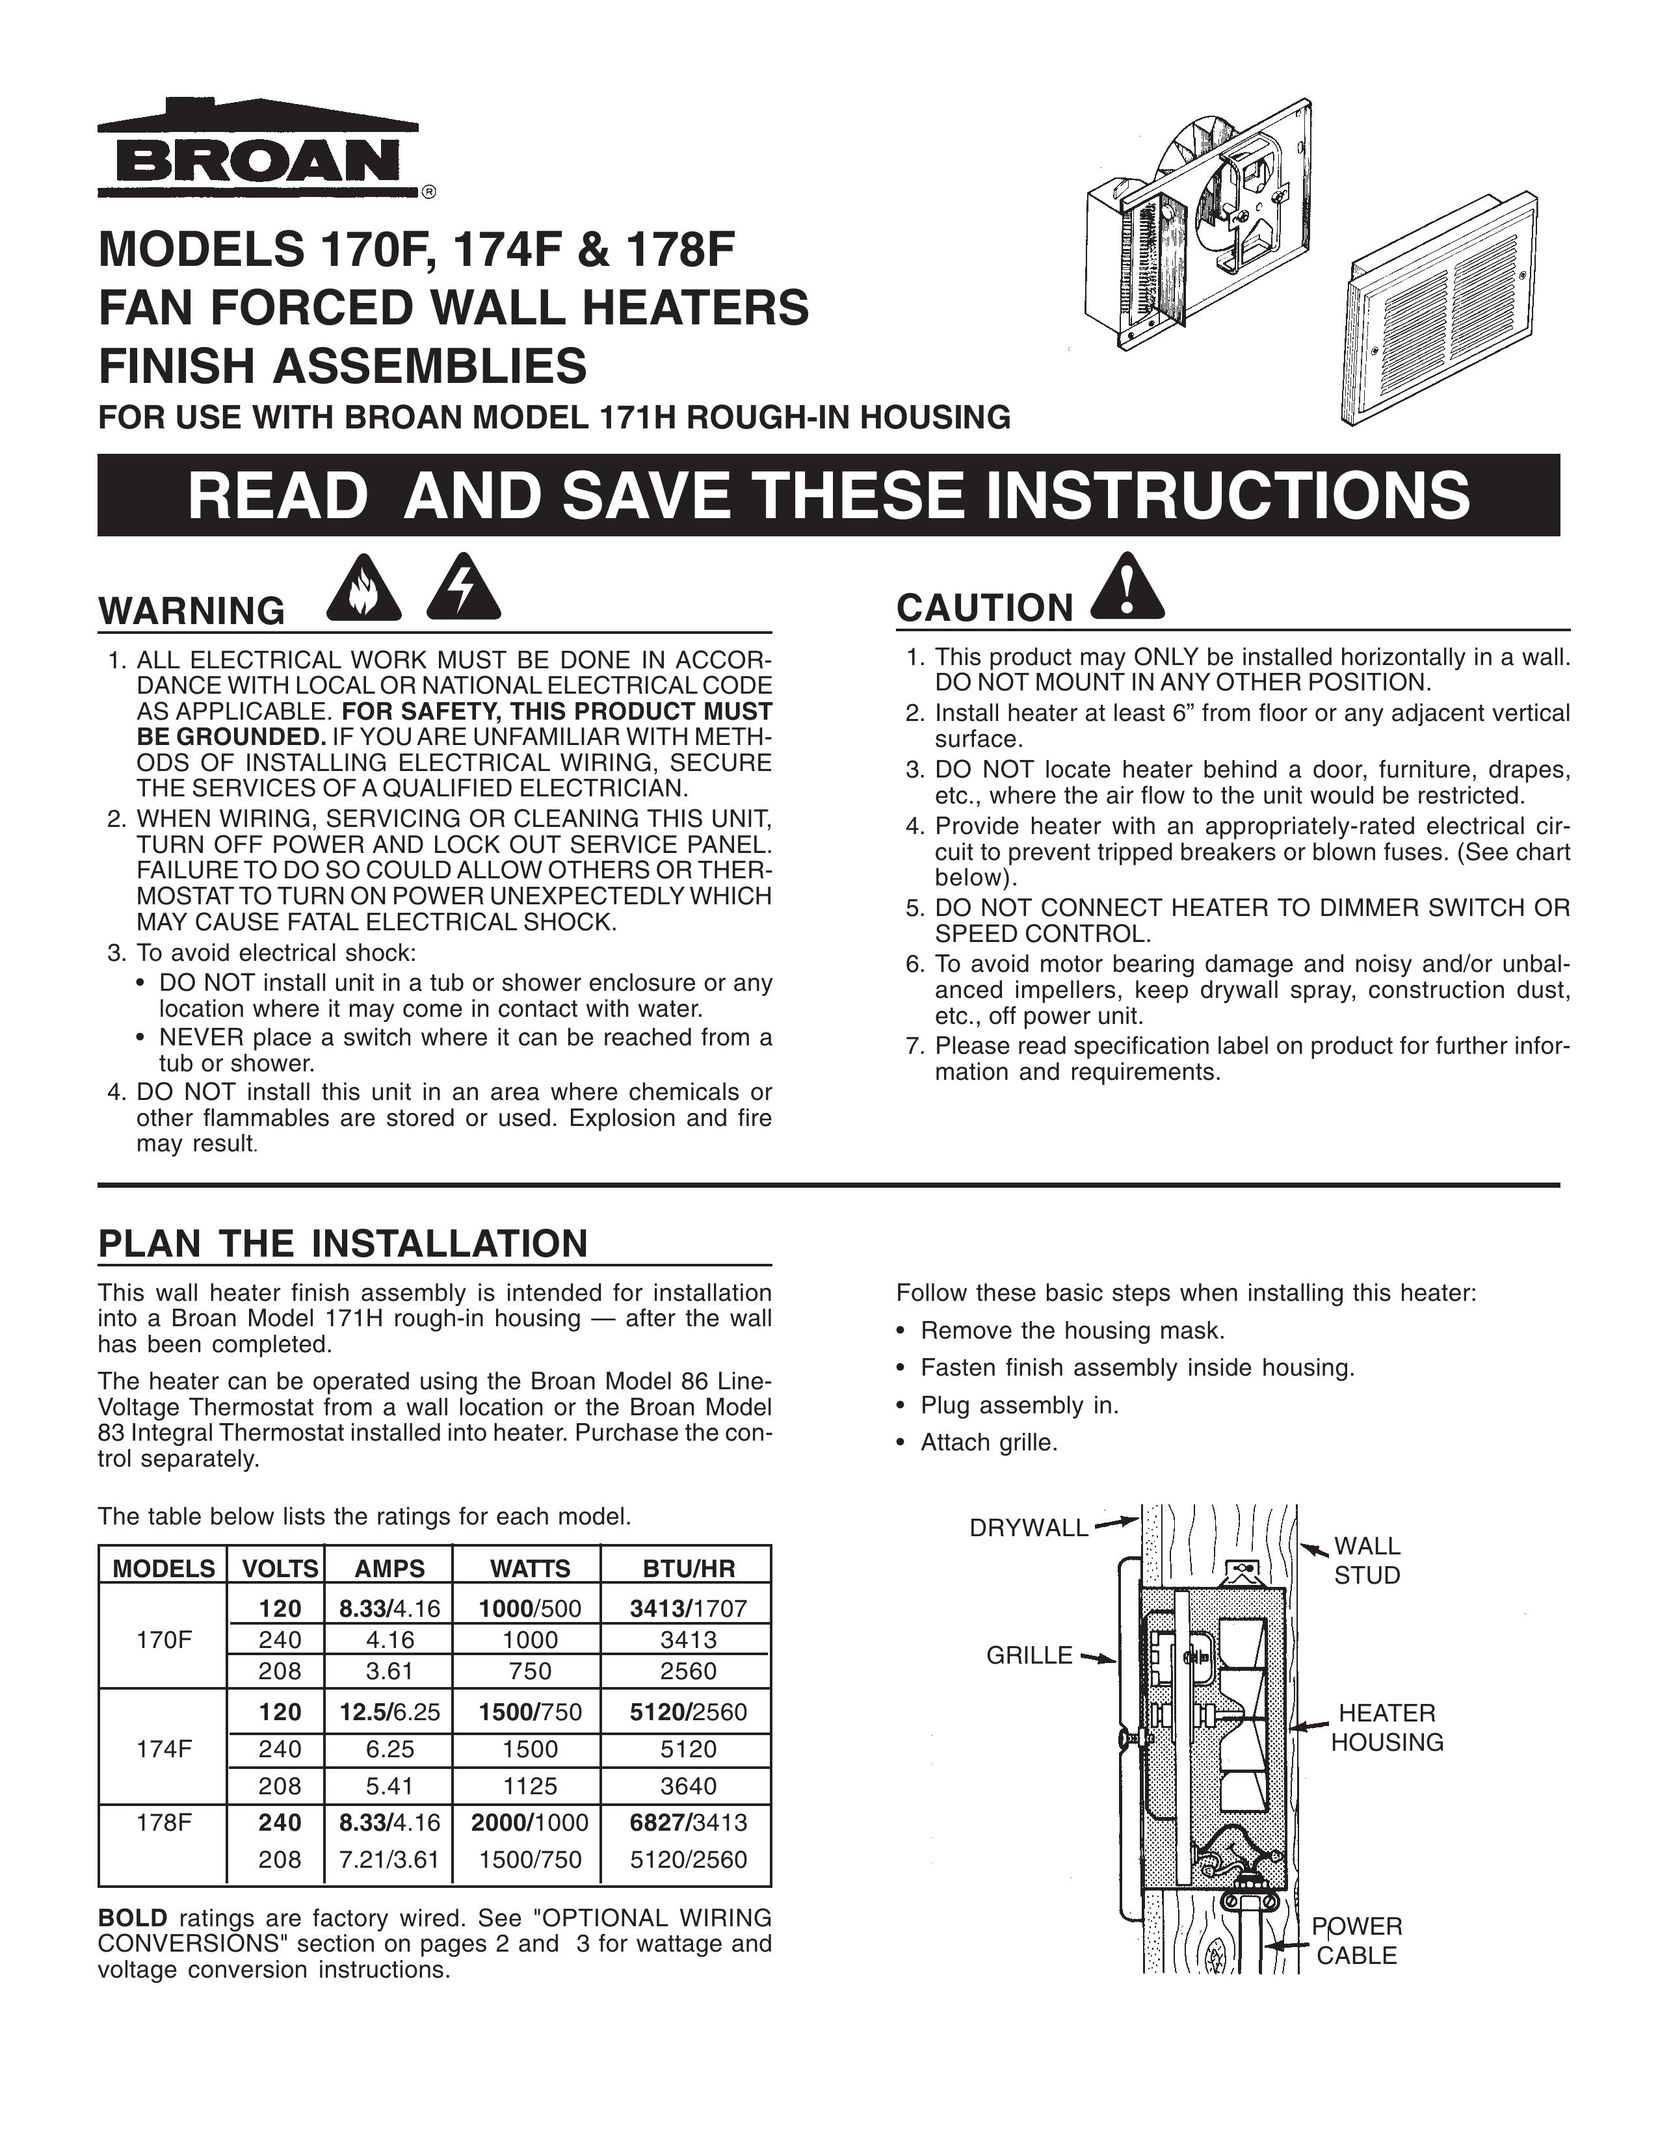 Broan 178F Air Conditioner User Manual